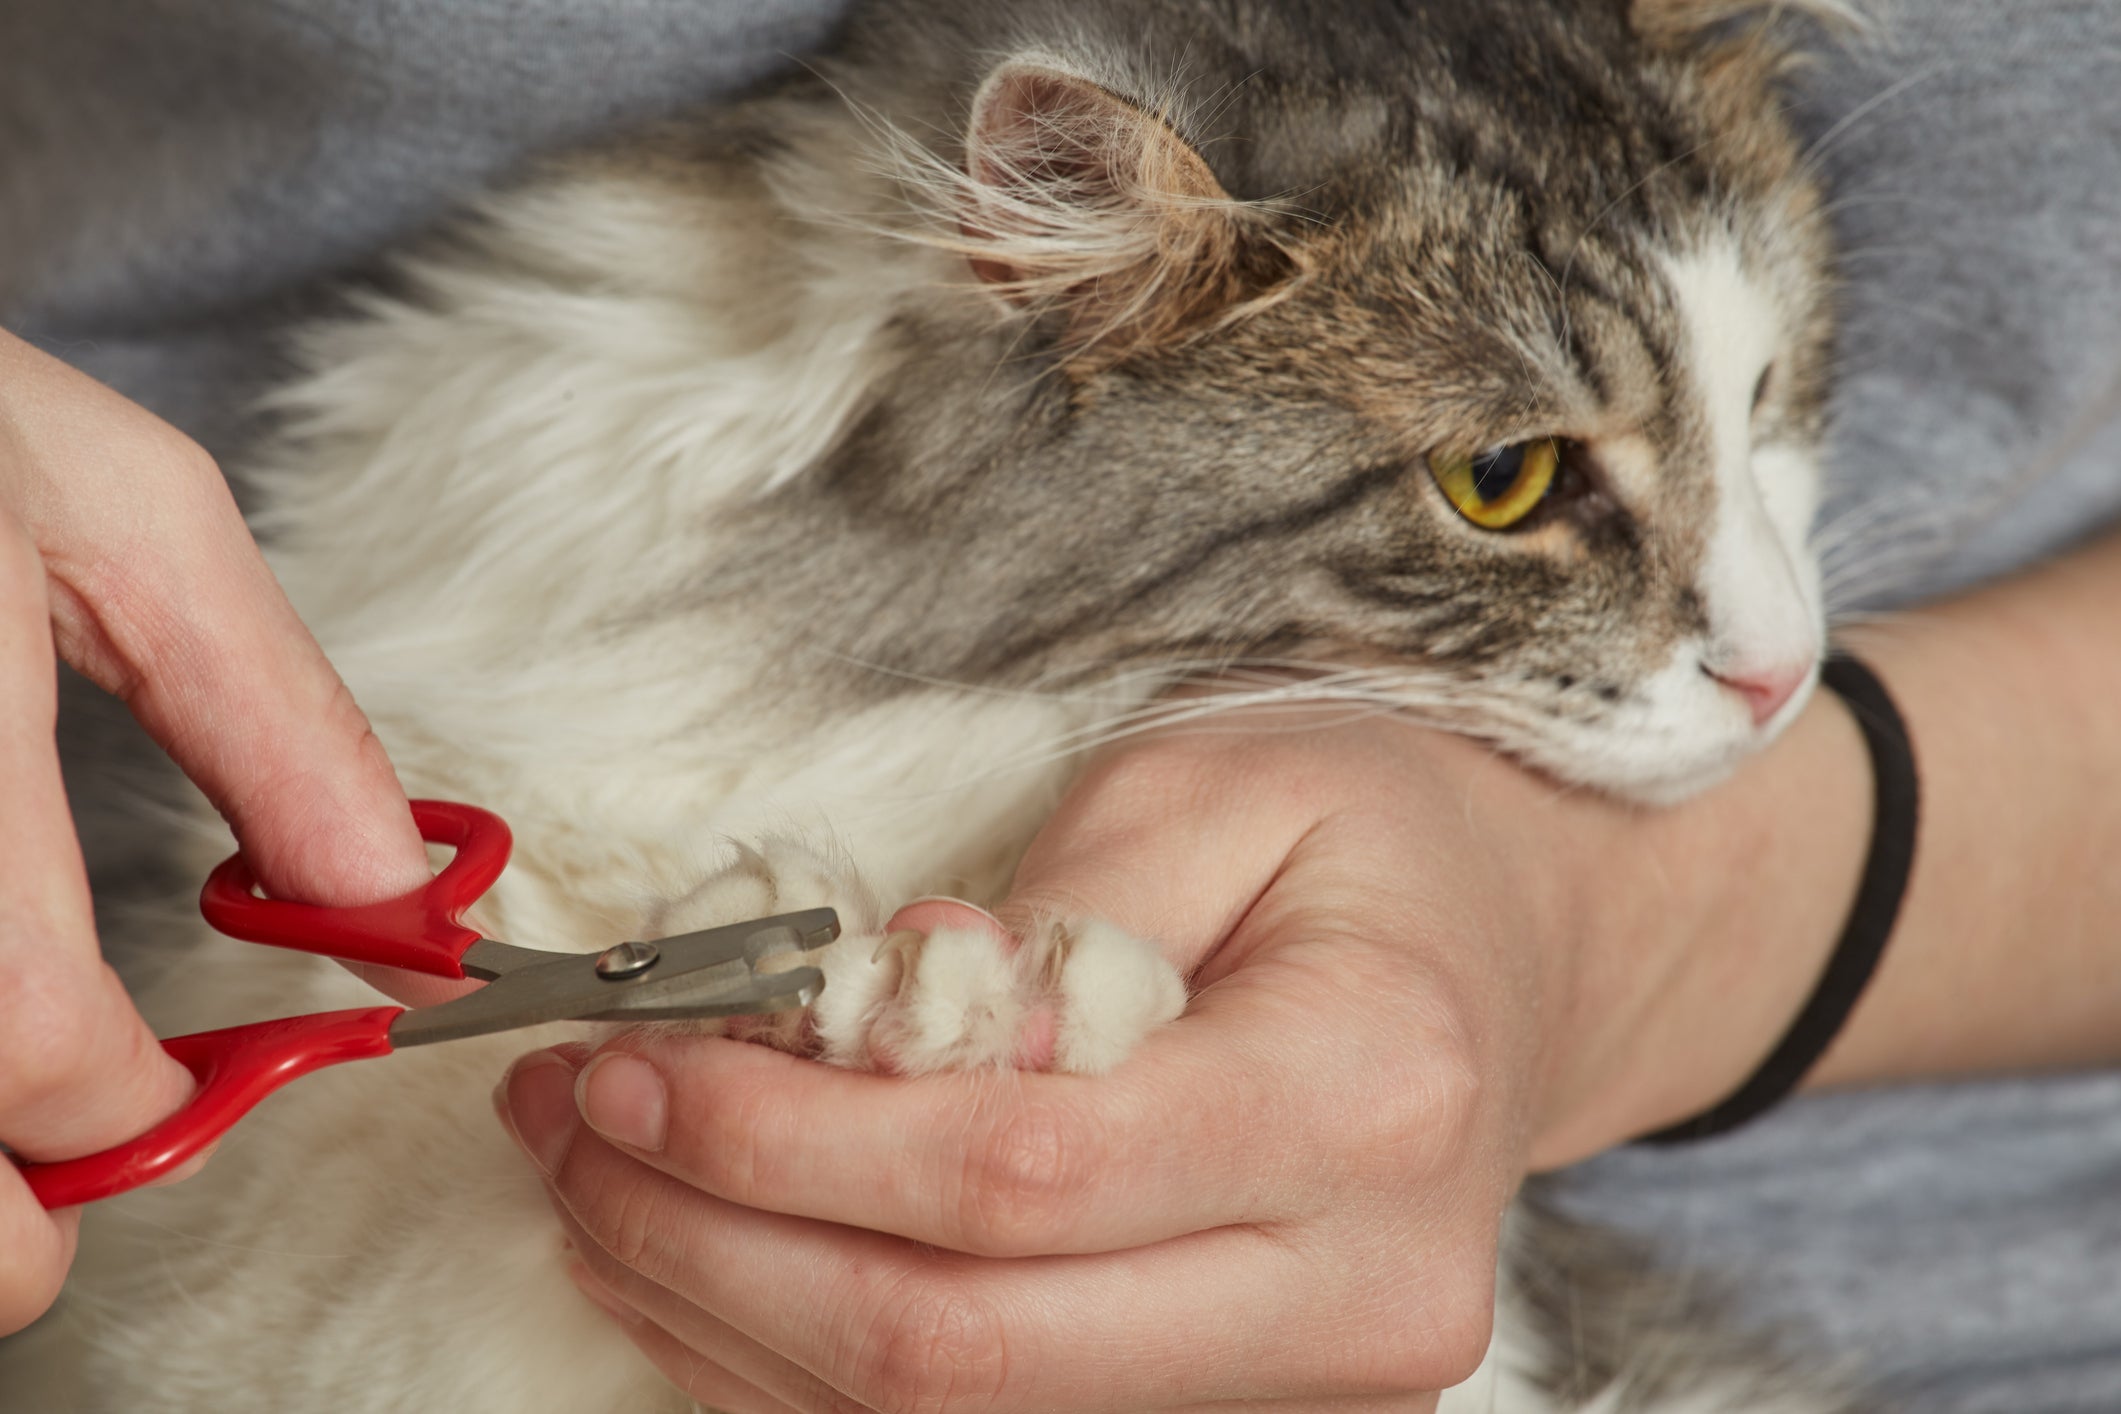 Tutora cortando unha de gato com tesoura vermelha